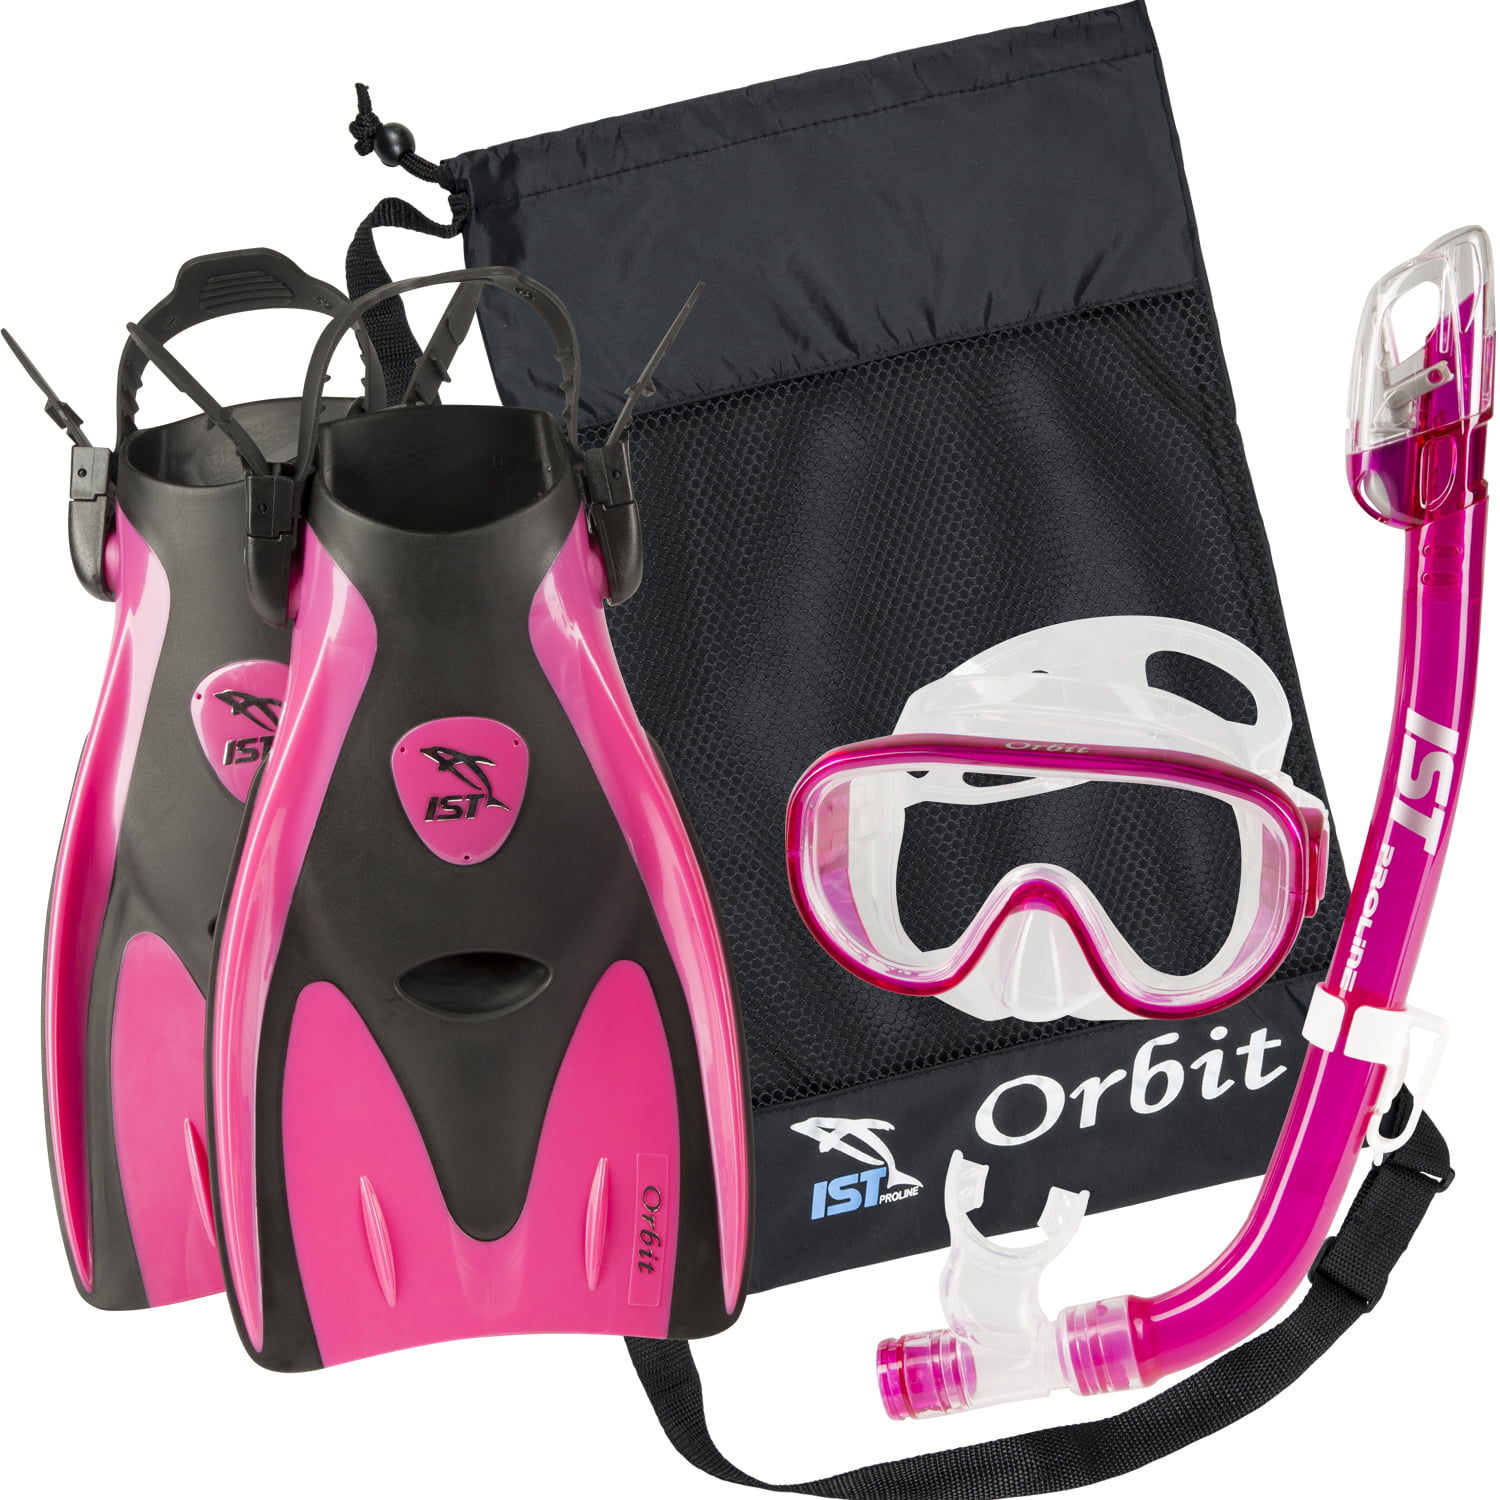 IST Orbit Premium Dry Top Snorkel and Panoramic Low Profile Mask 